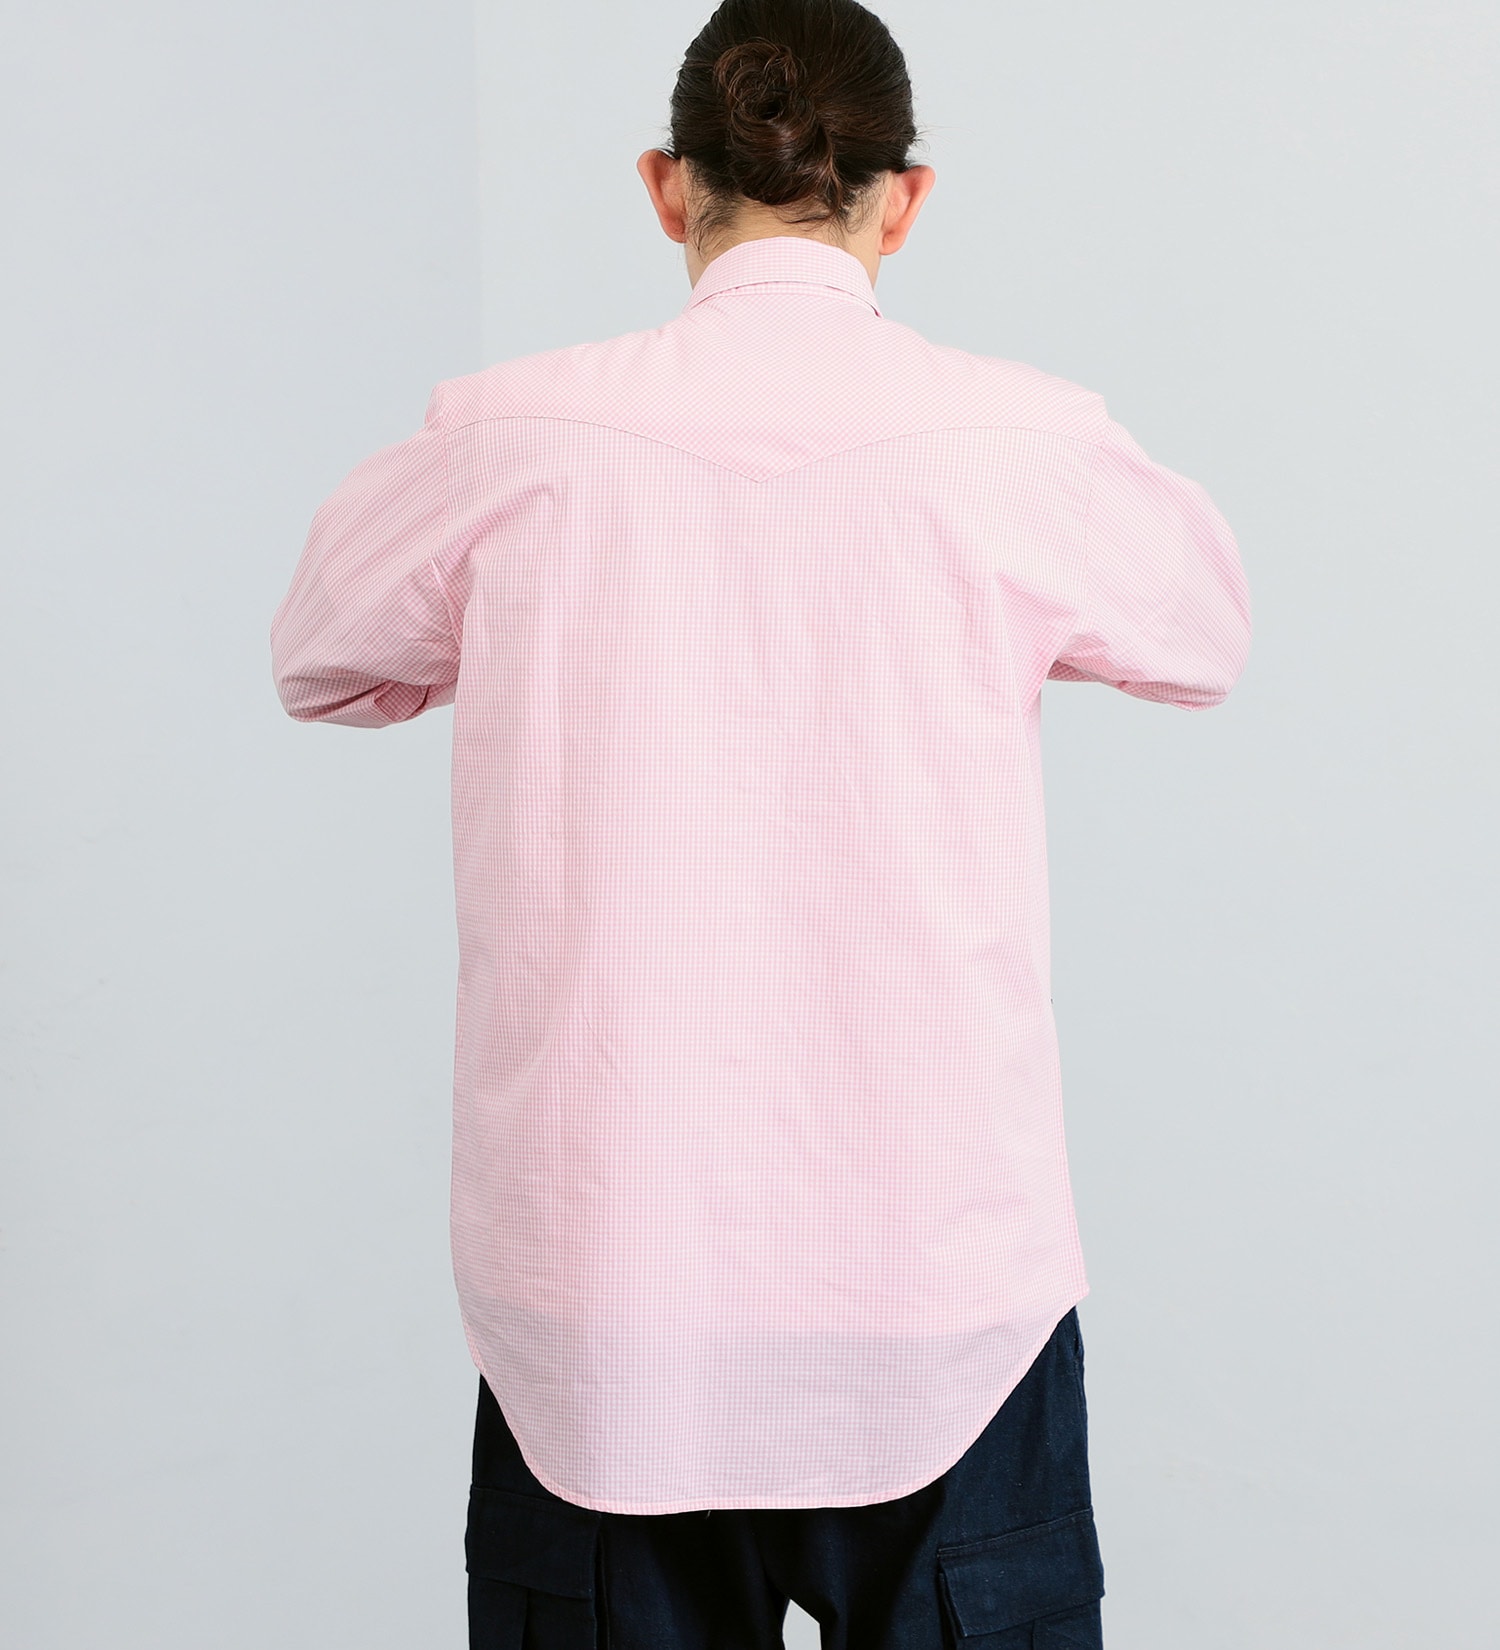 Lee(リー)のDUNGAREES ギンガムチェック ウエスタンシャツ|トップス/シャツ/ブラウス/メンズ|ピンク